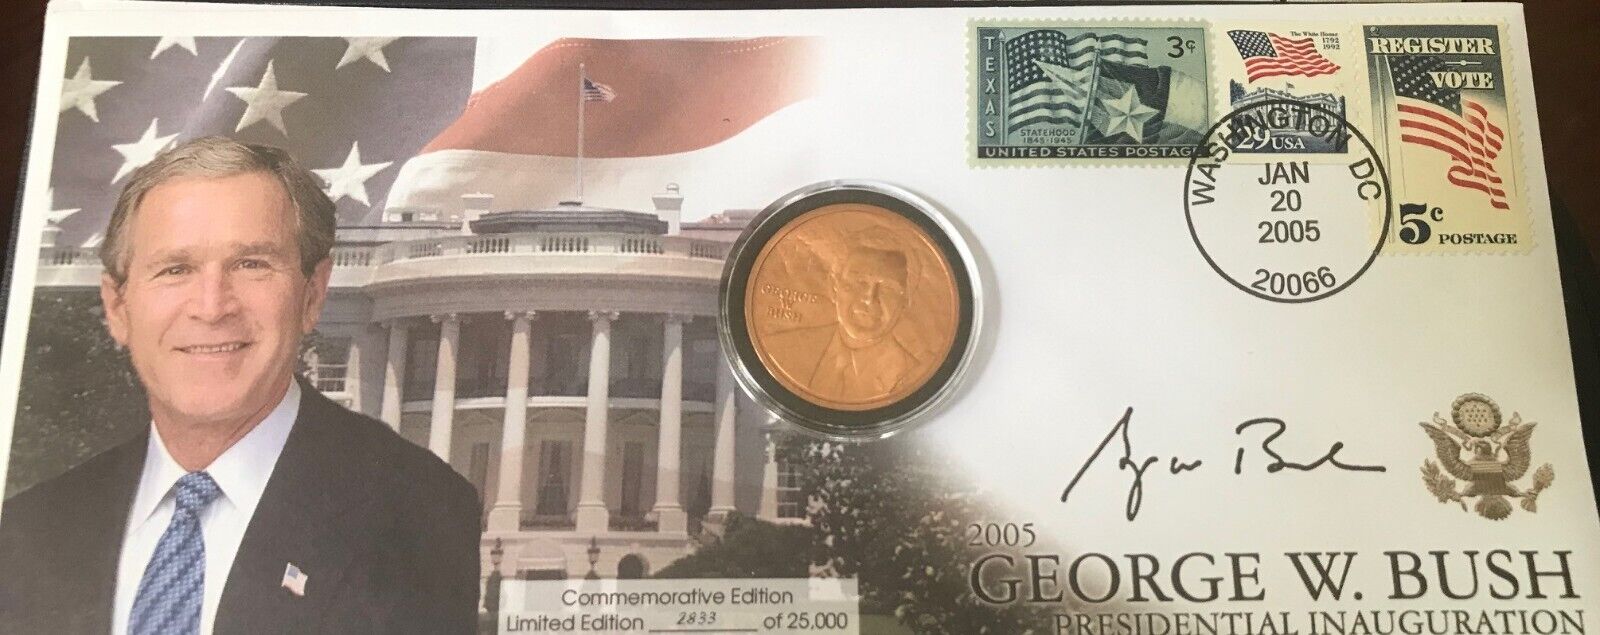 Commemorative George W. Bush Presidential Inauguration Coin January 20, 2005 COA